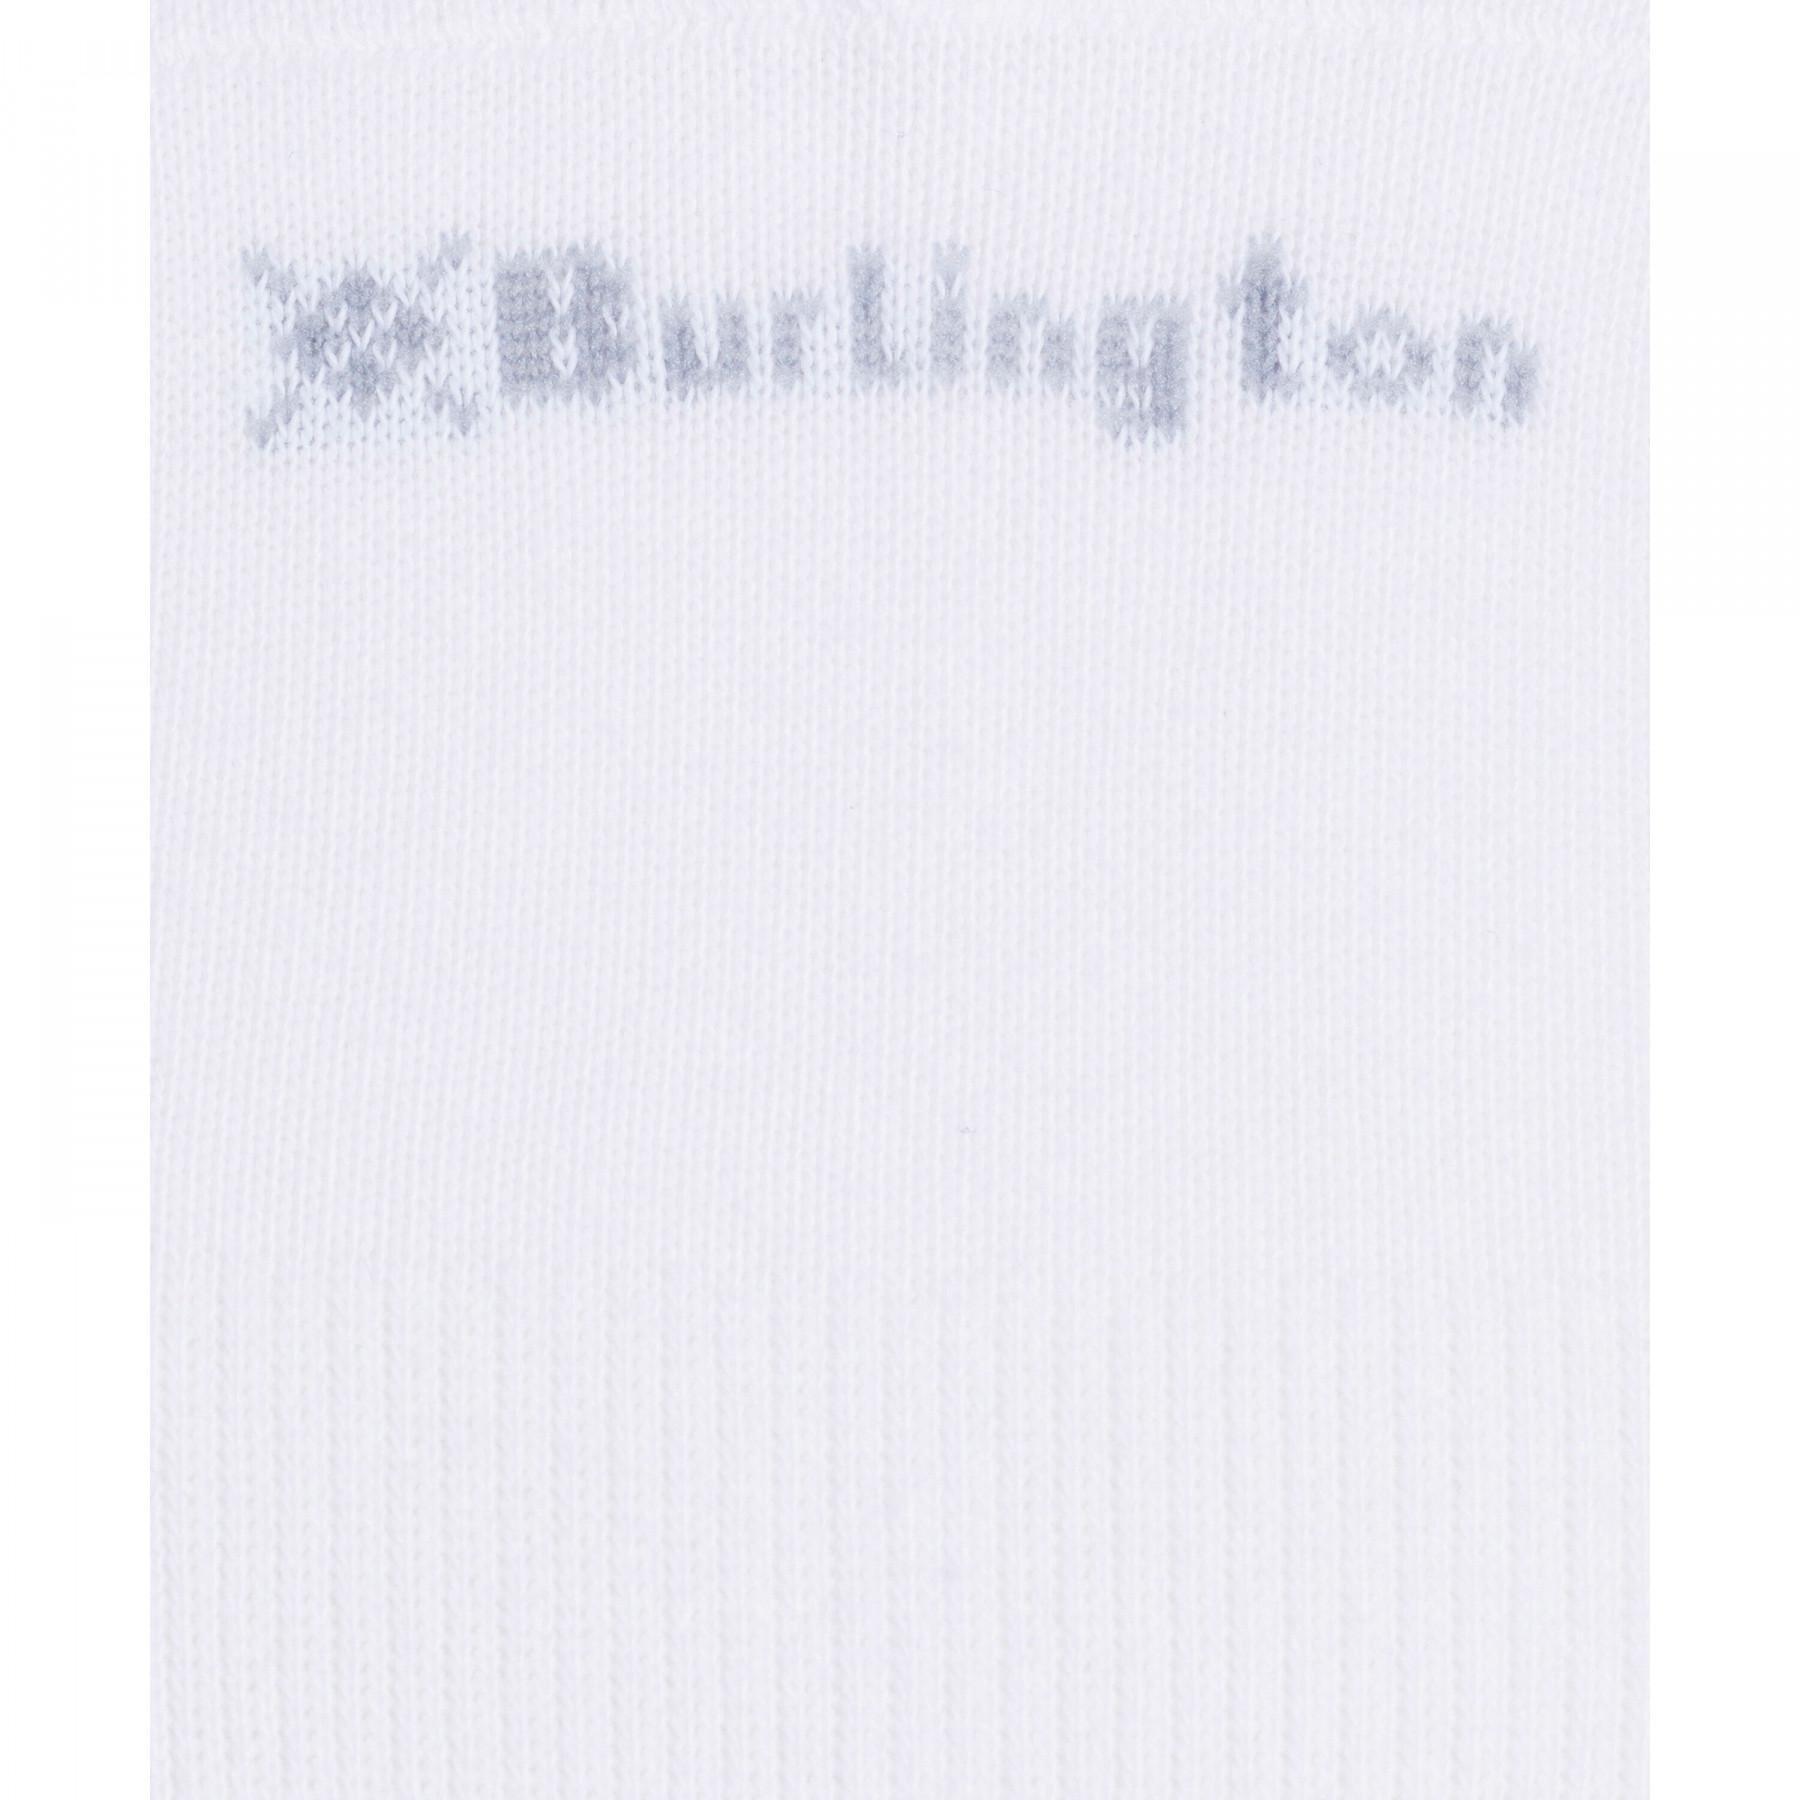 Set of 2 low socks Burlington Everyday 2-Pack